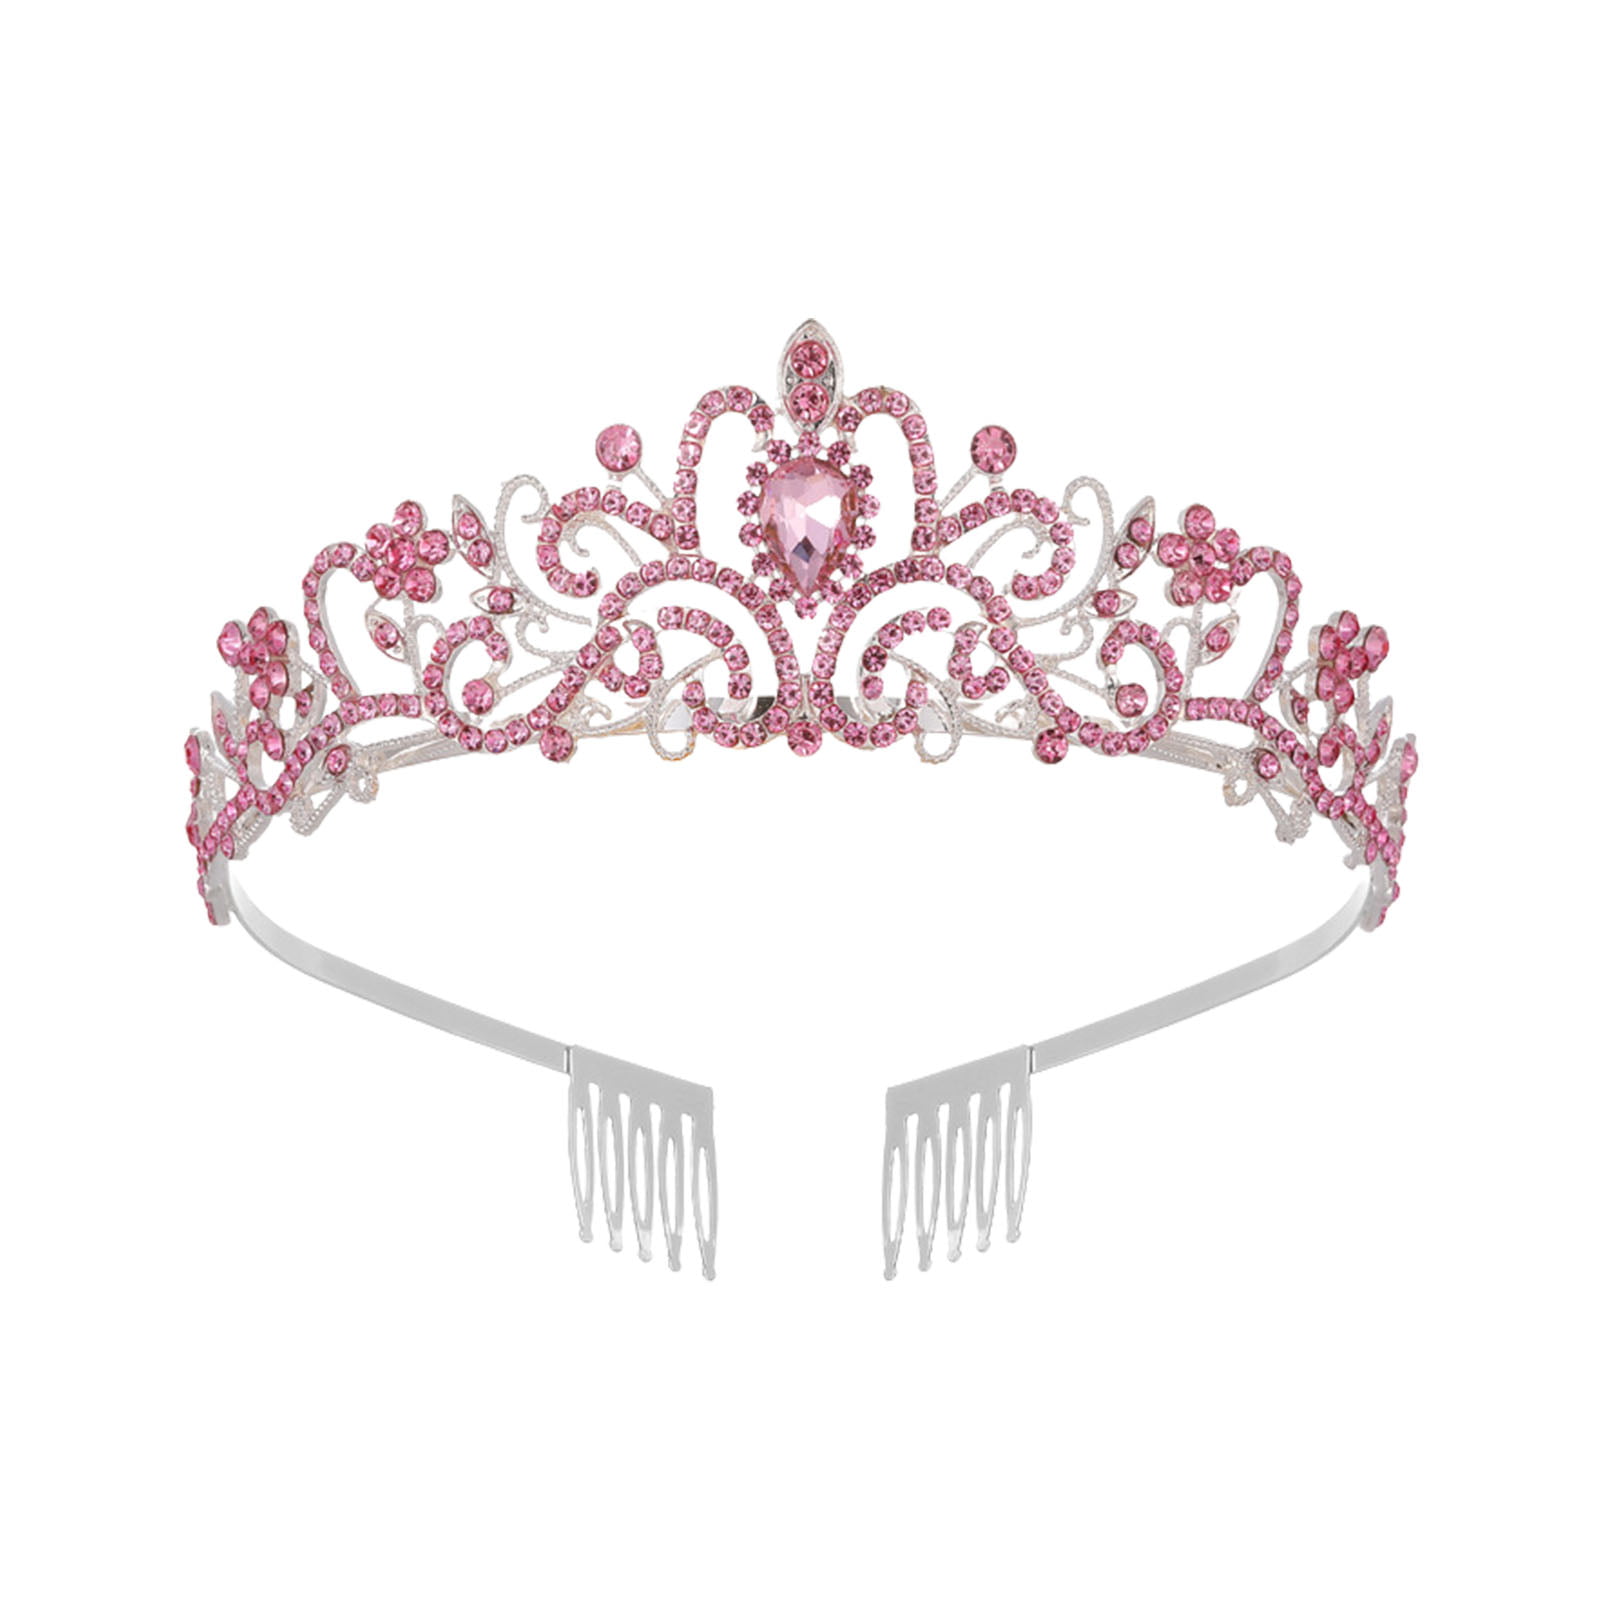 Details about   Rhinestone Bride Tiaras Crown Wedding Hair Accessories Bridal Crystal Headpiece 